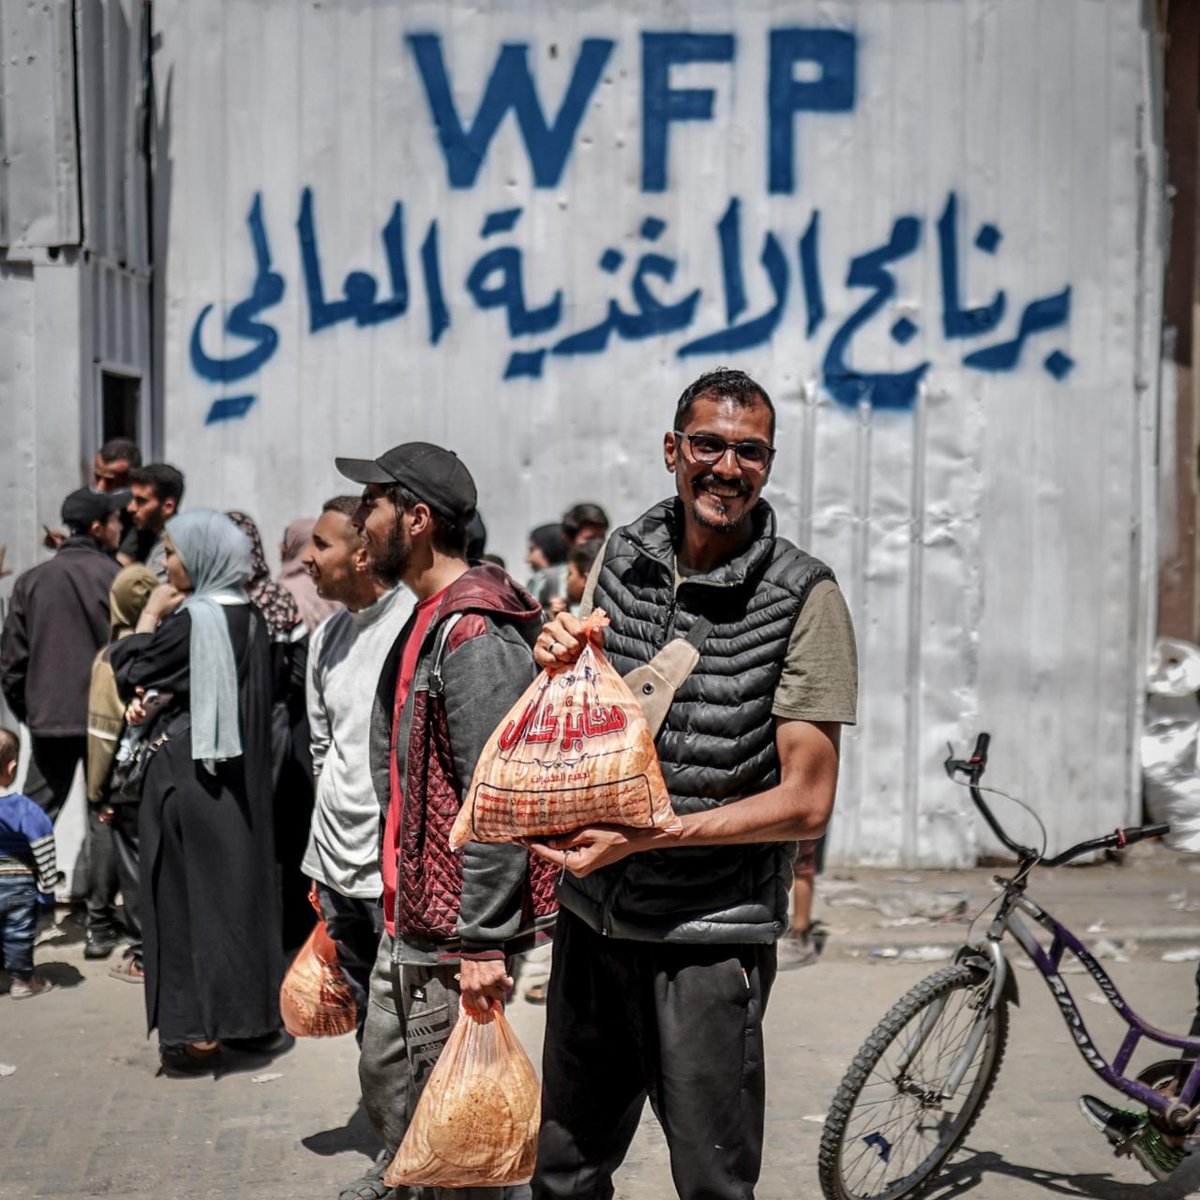 WFP_Arabic tweet picture